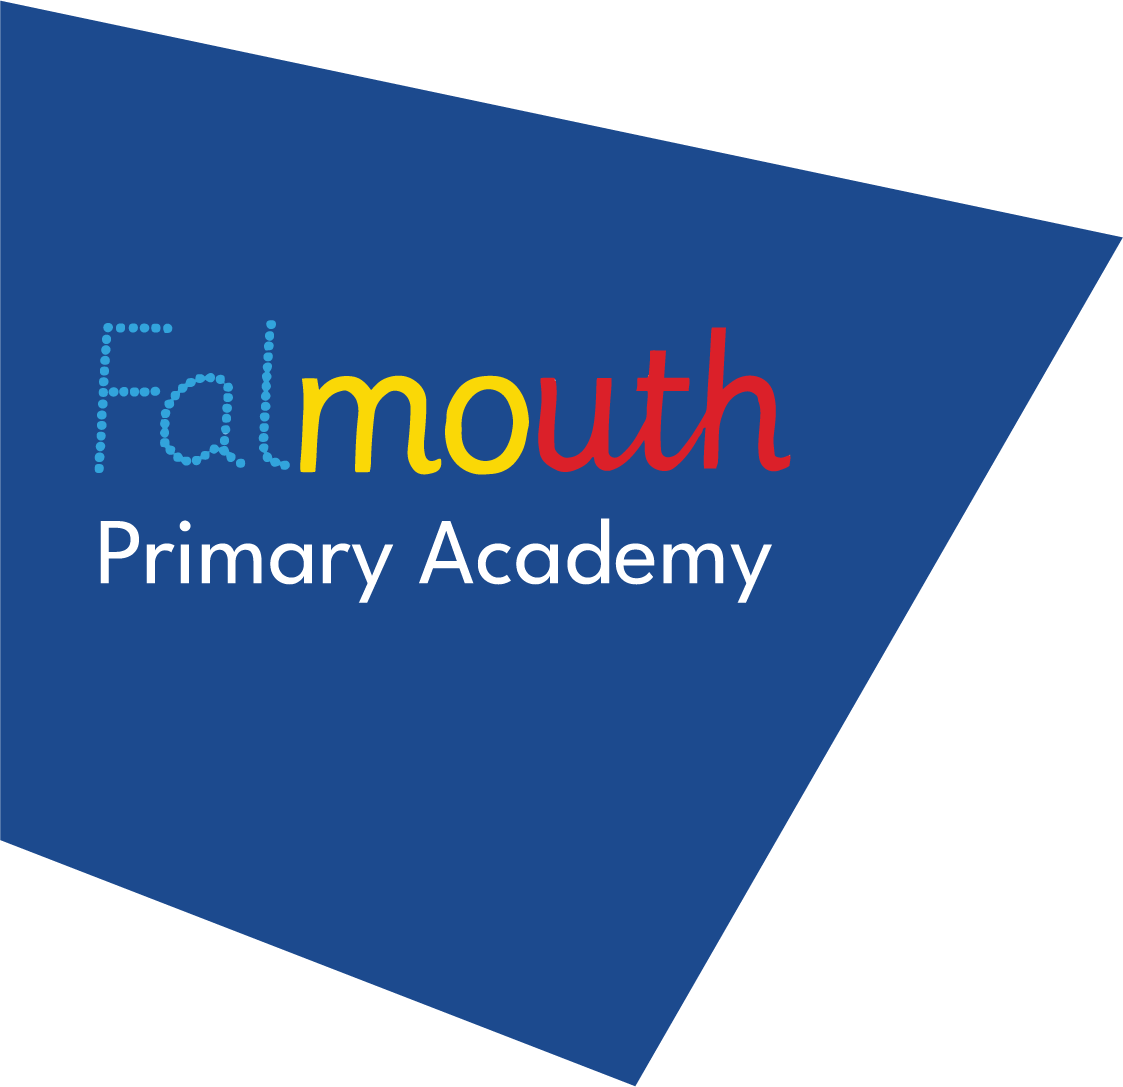 Falmouth Primary Academy logo